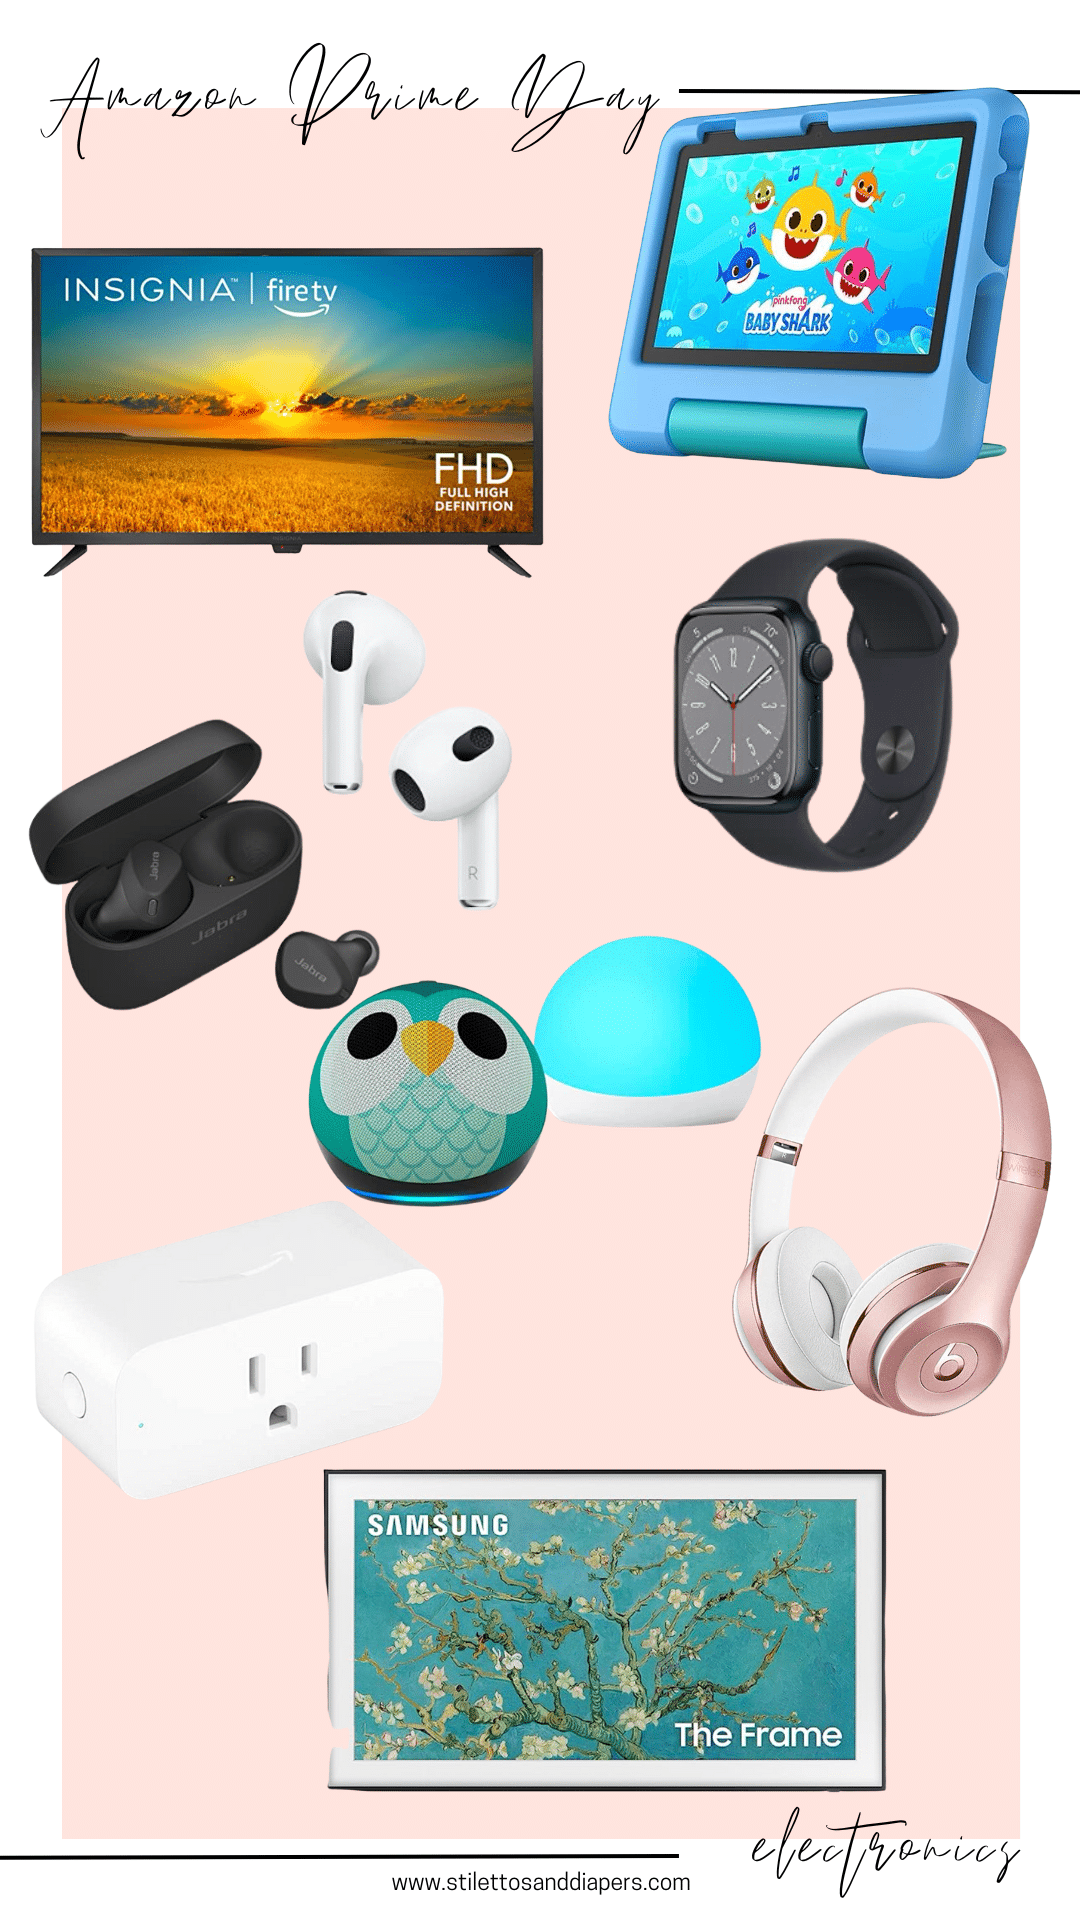 Best Deals of Amazon PrimeDay - Electronics